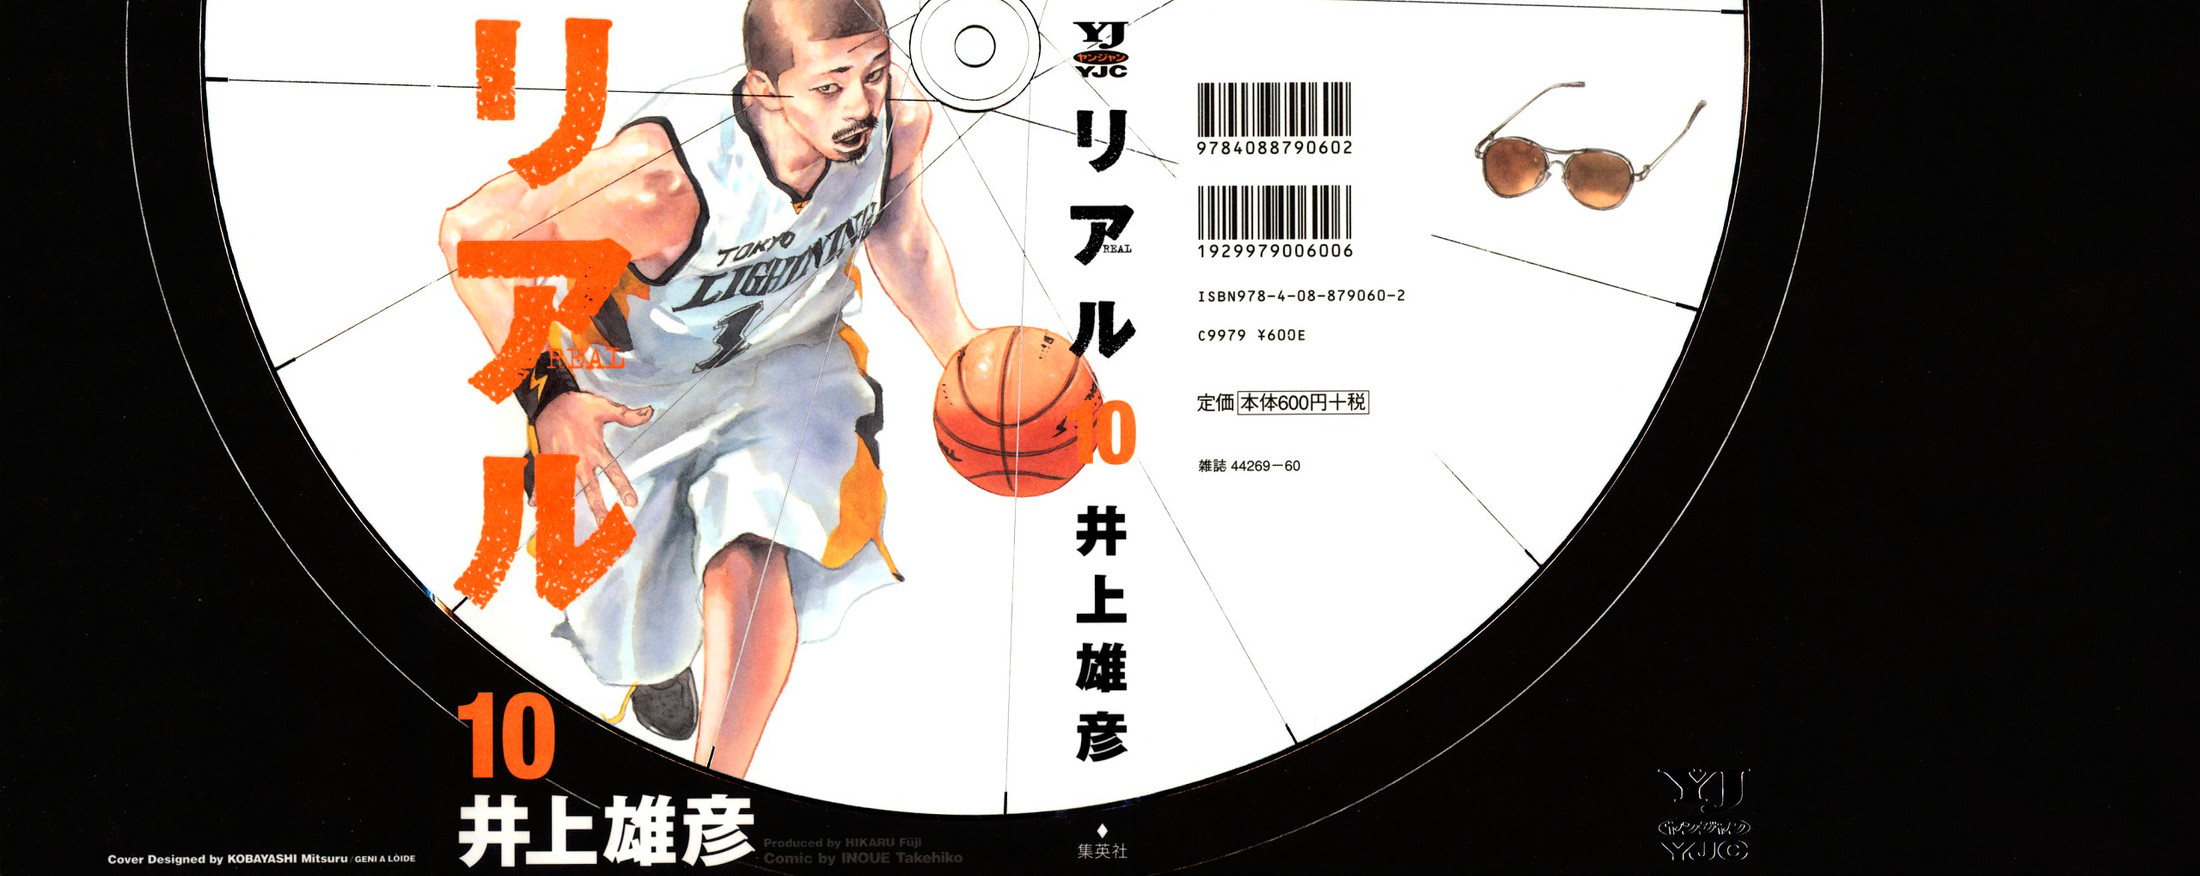 Такэхико Иноэ. Такэхико Иноуэ баскетбол. Real Manga. Real Manga Cover.